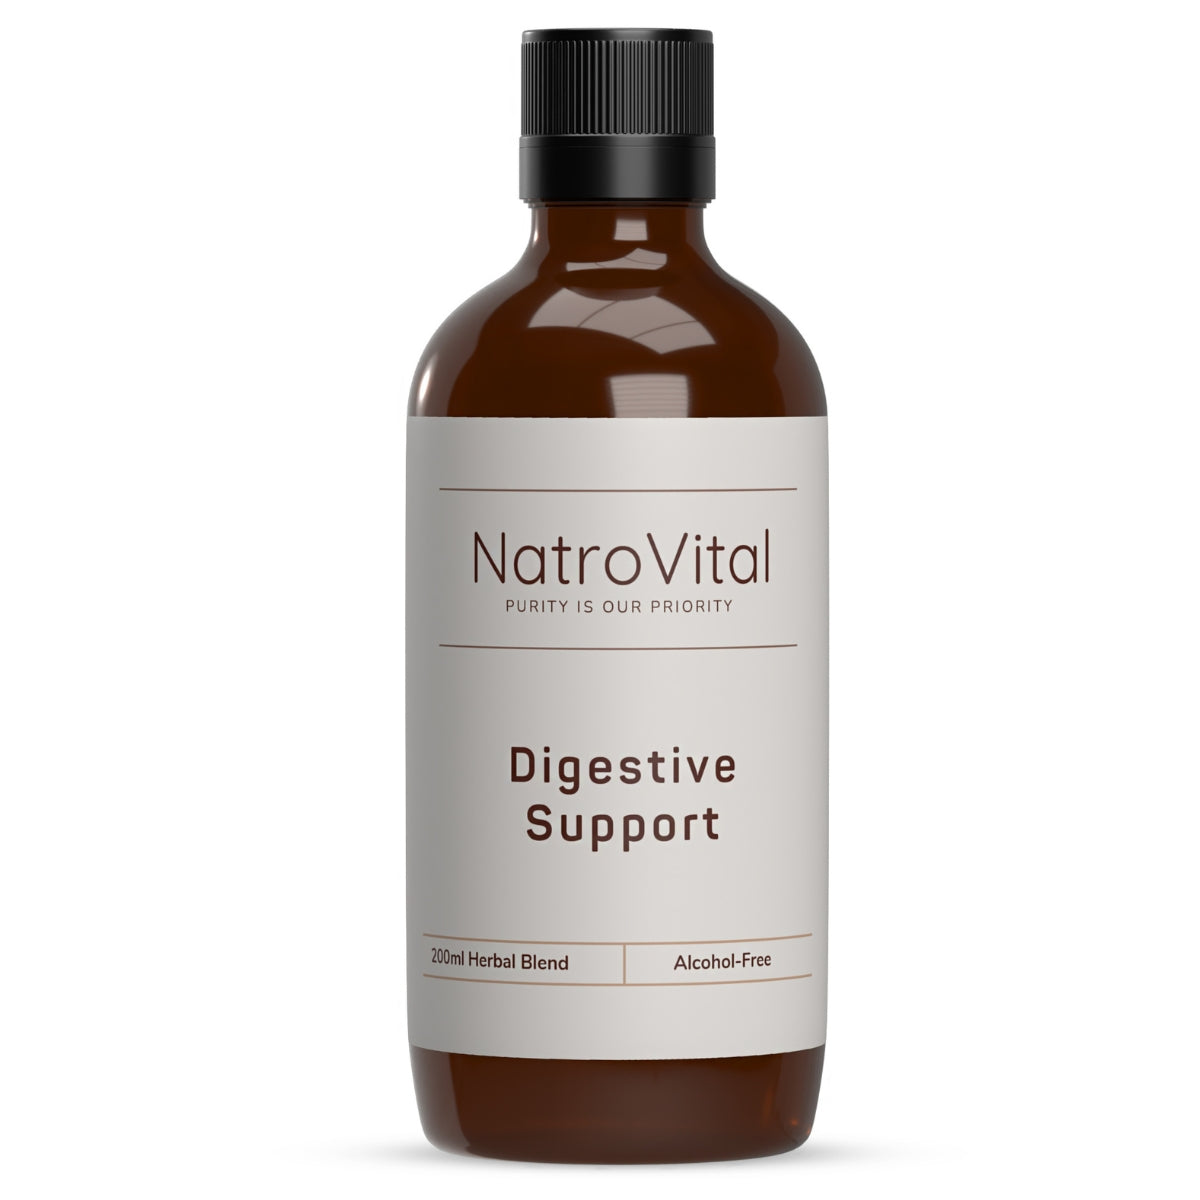 NatroVital Digestive Support